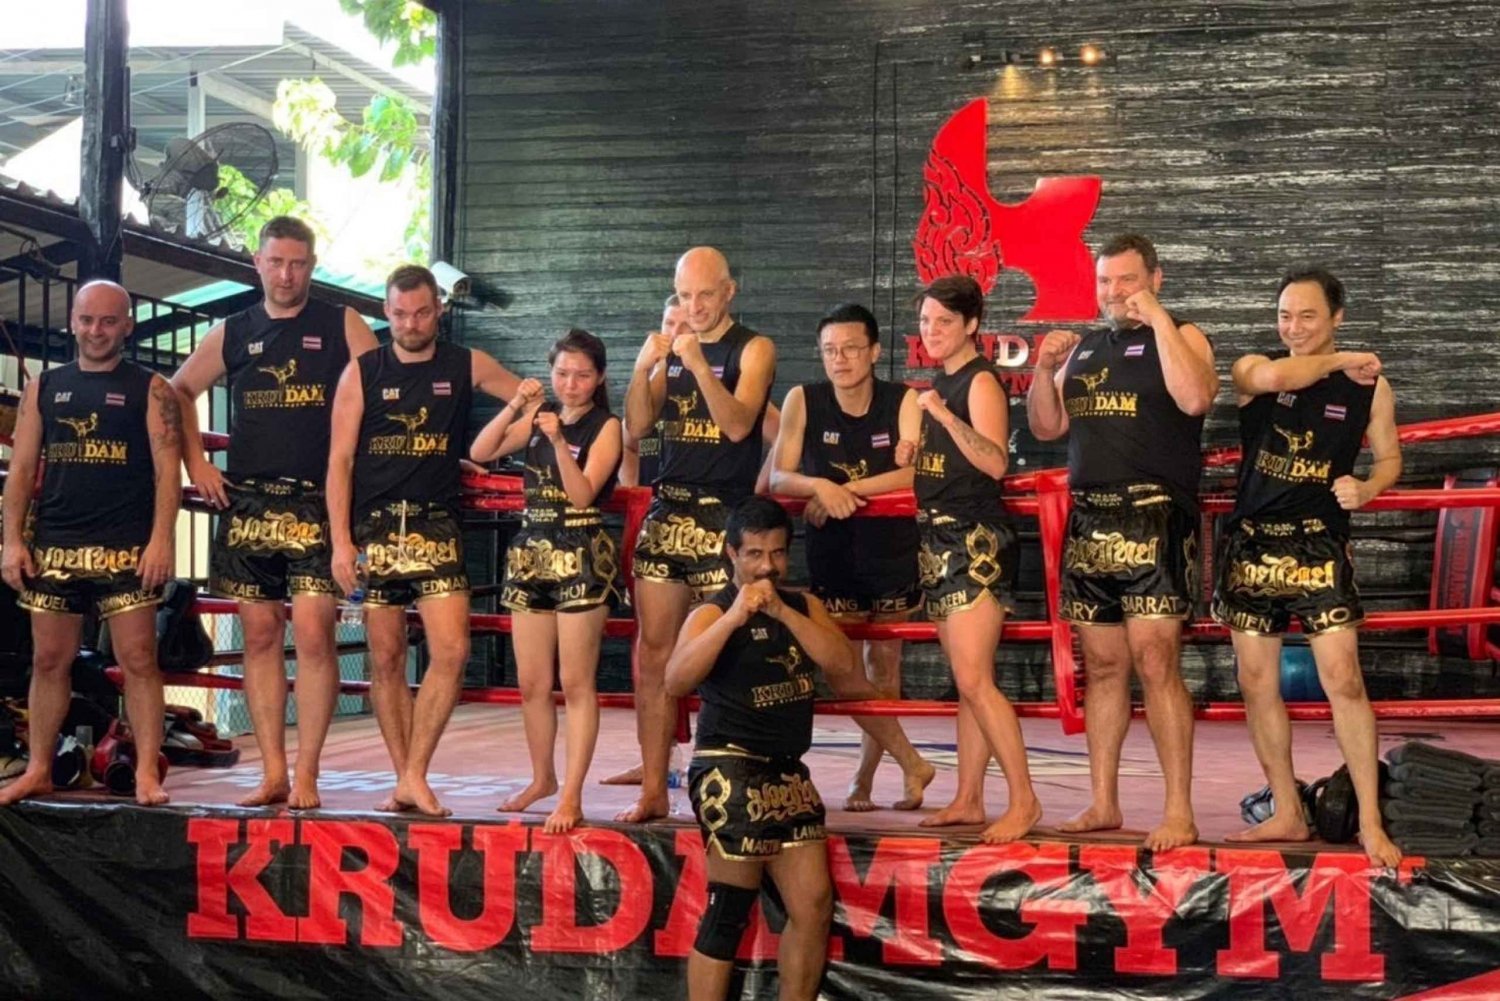 Muay Thai Training Class by Krudam Gym @Sukhumvit 36